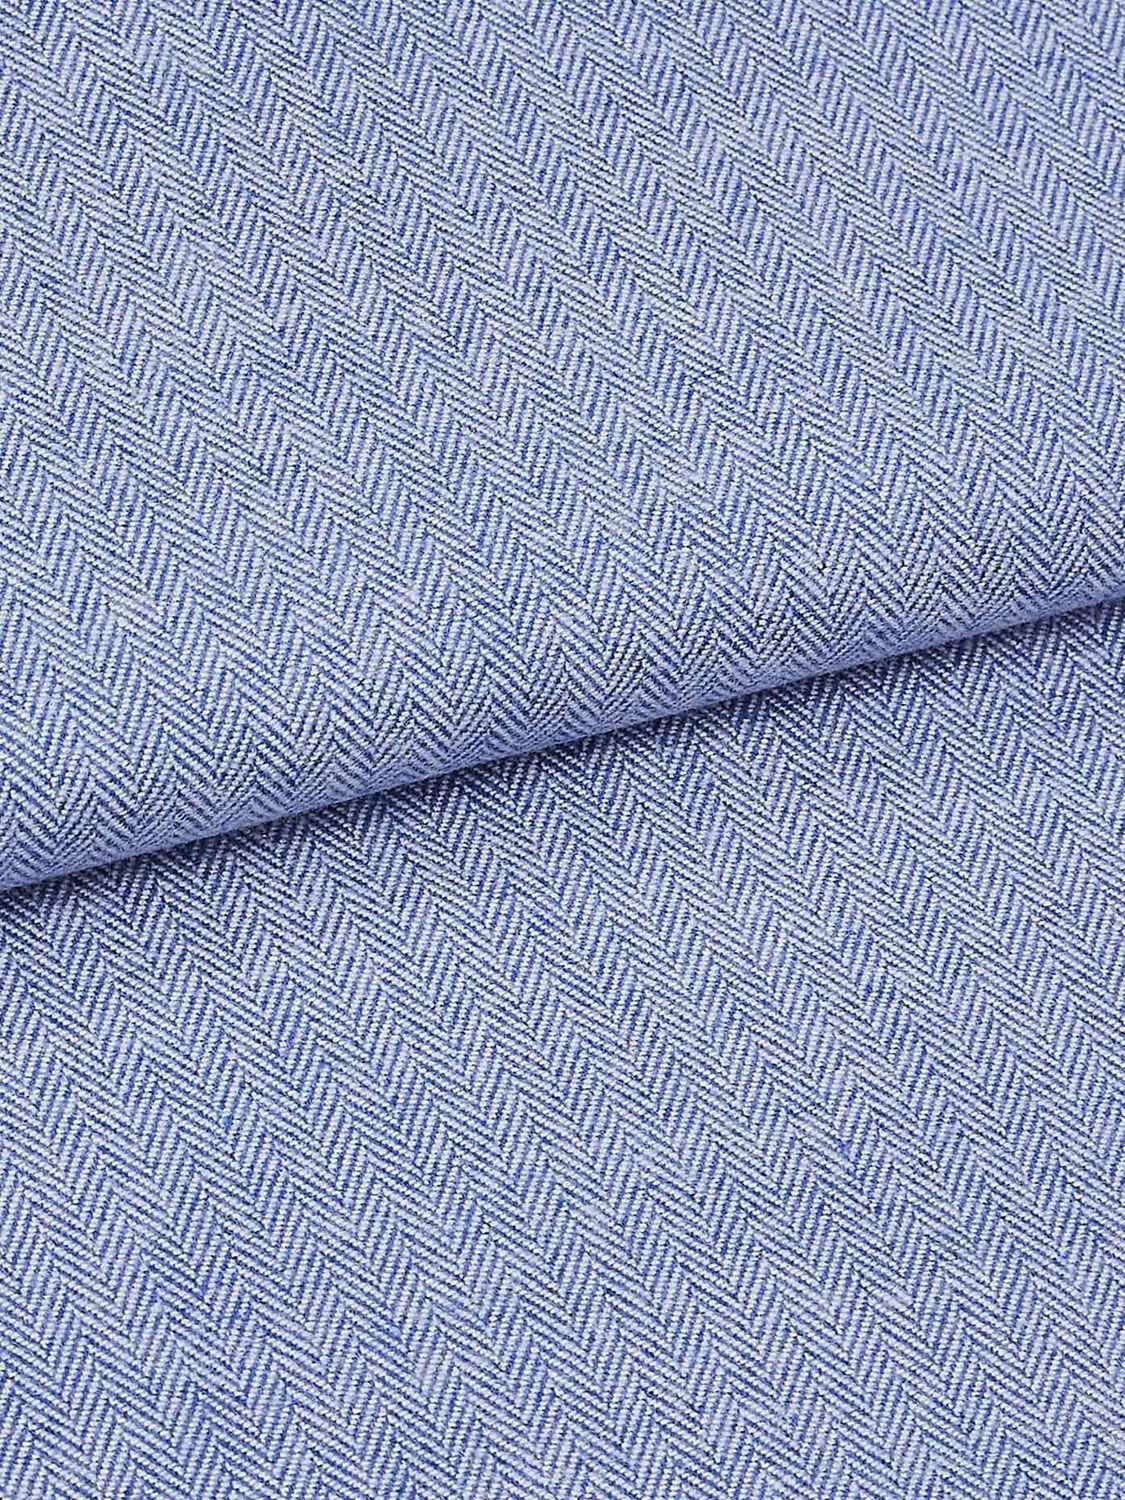 British Boxers Herringbone Brushed Cotton Pyjama Set, Staffordshire Blue, S